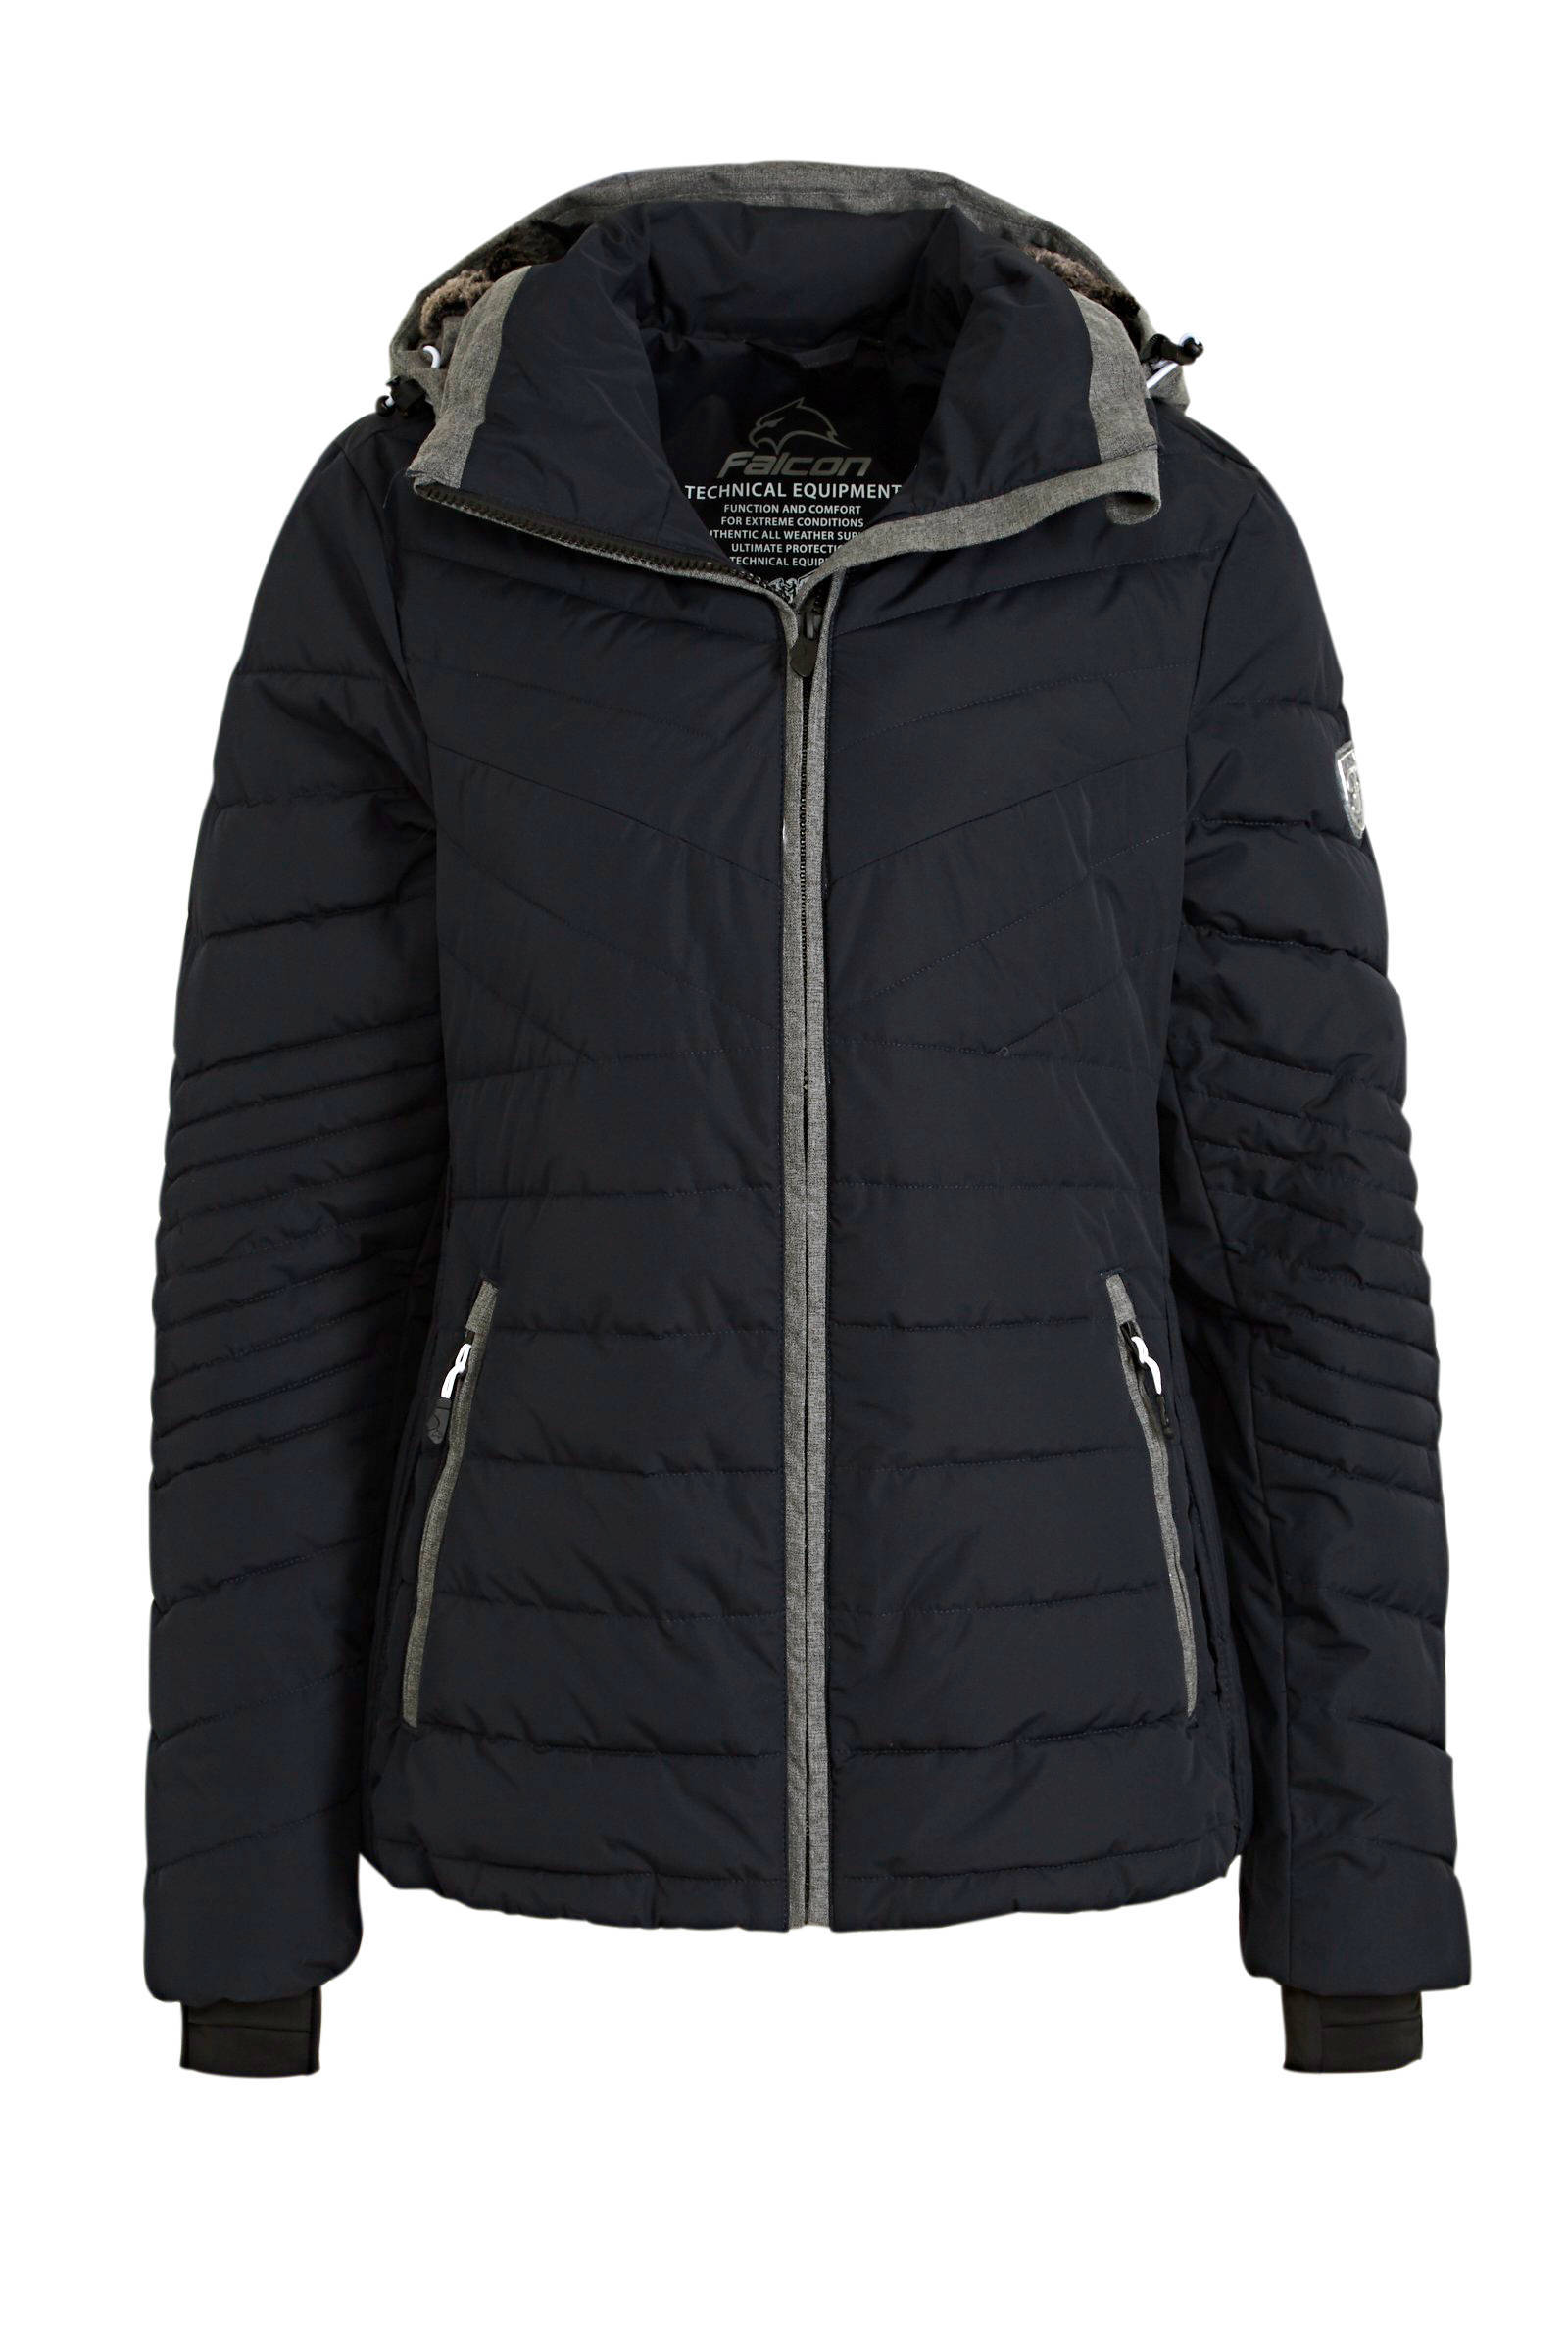 Falcon gewatteerde jas Seleste donkerblauw online kopen